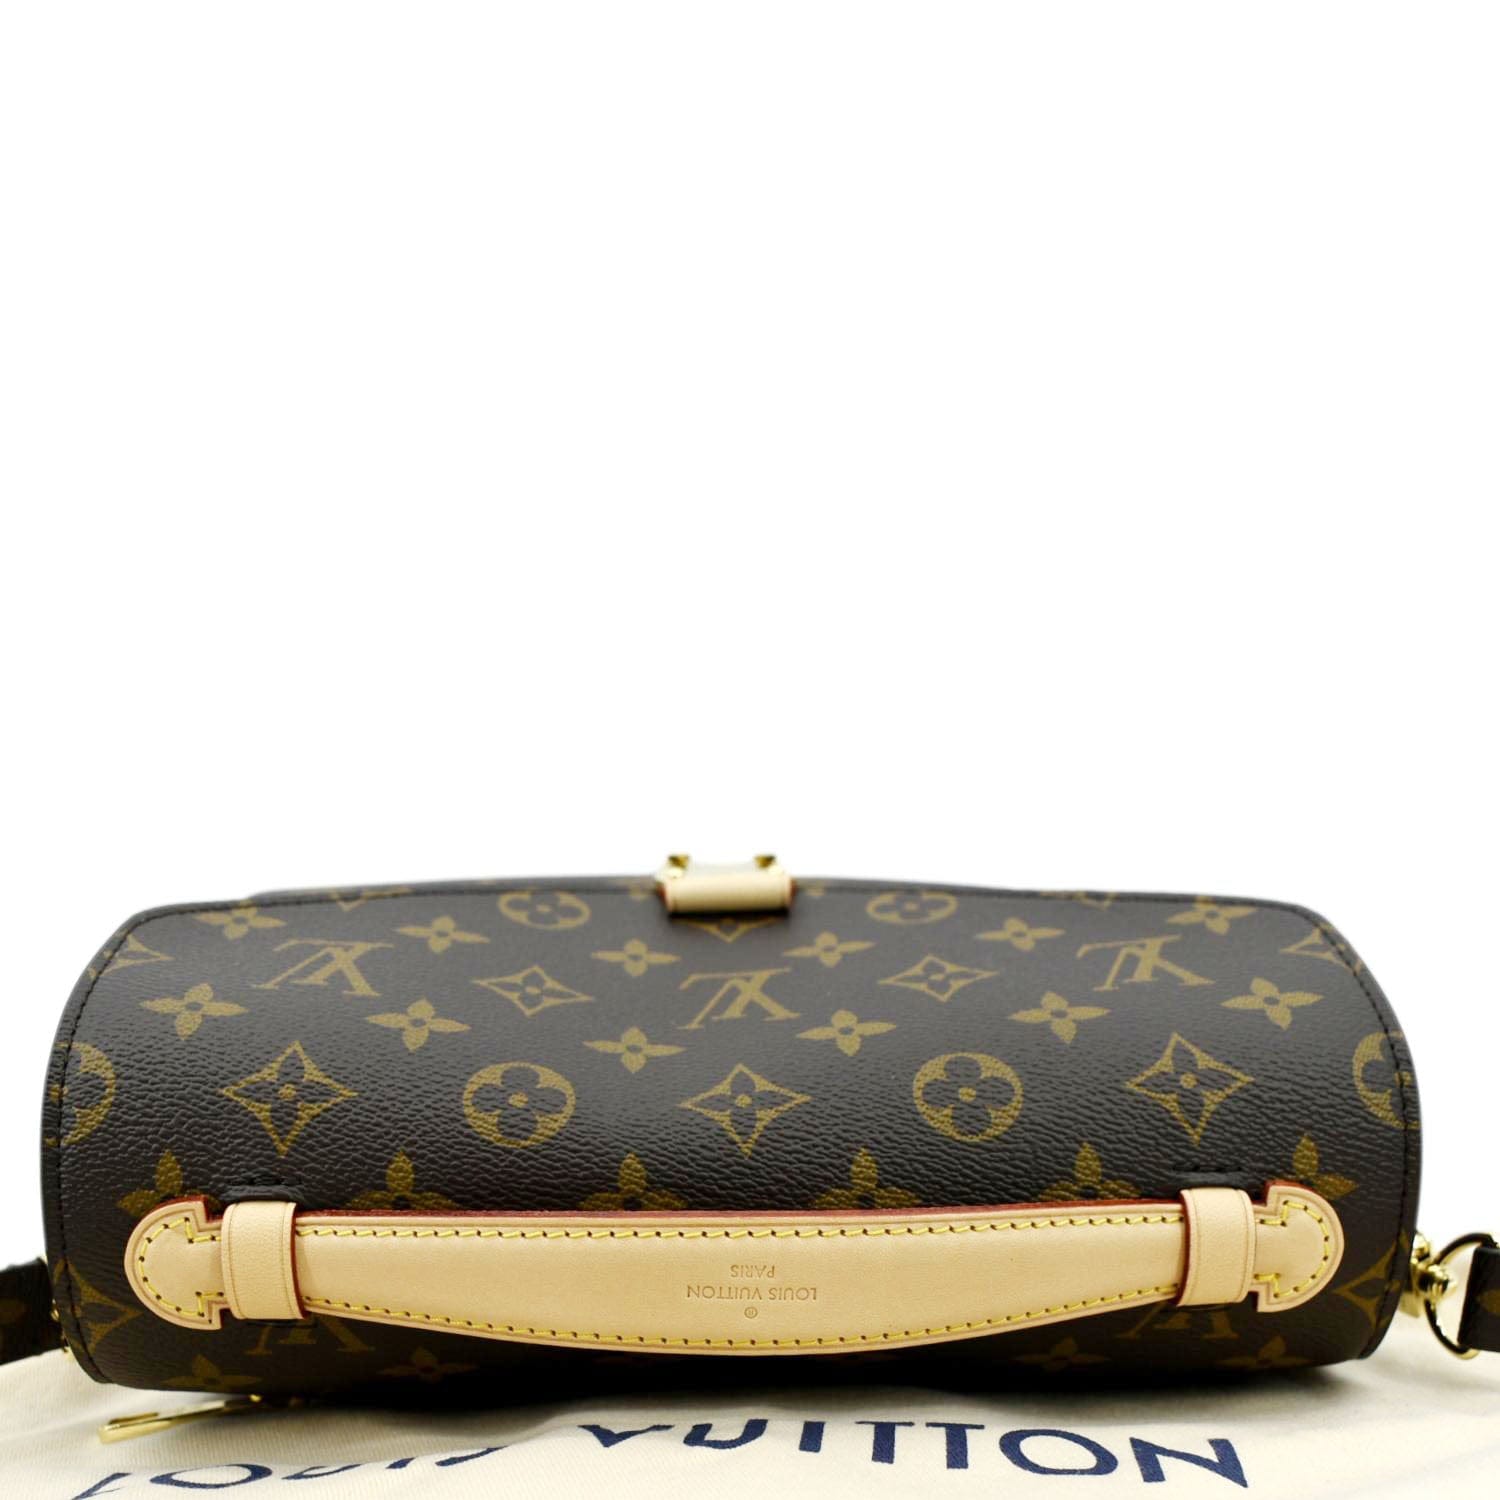 Chic And Stylish Louis Vuitton Pochette Métis Handbag